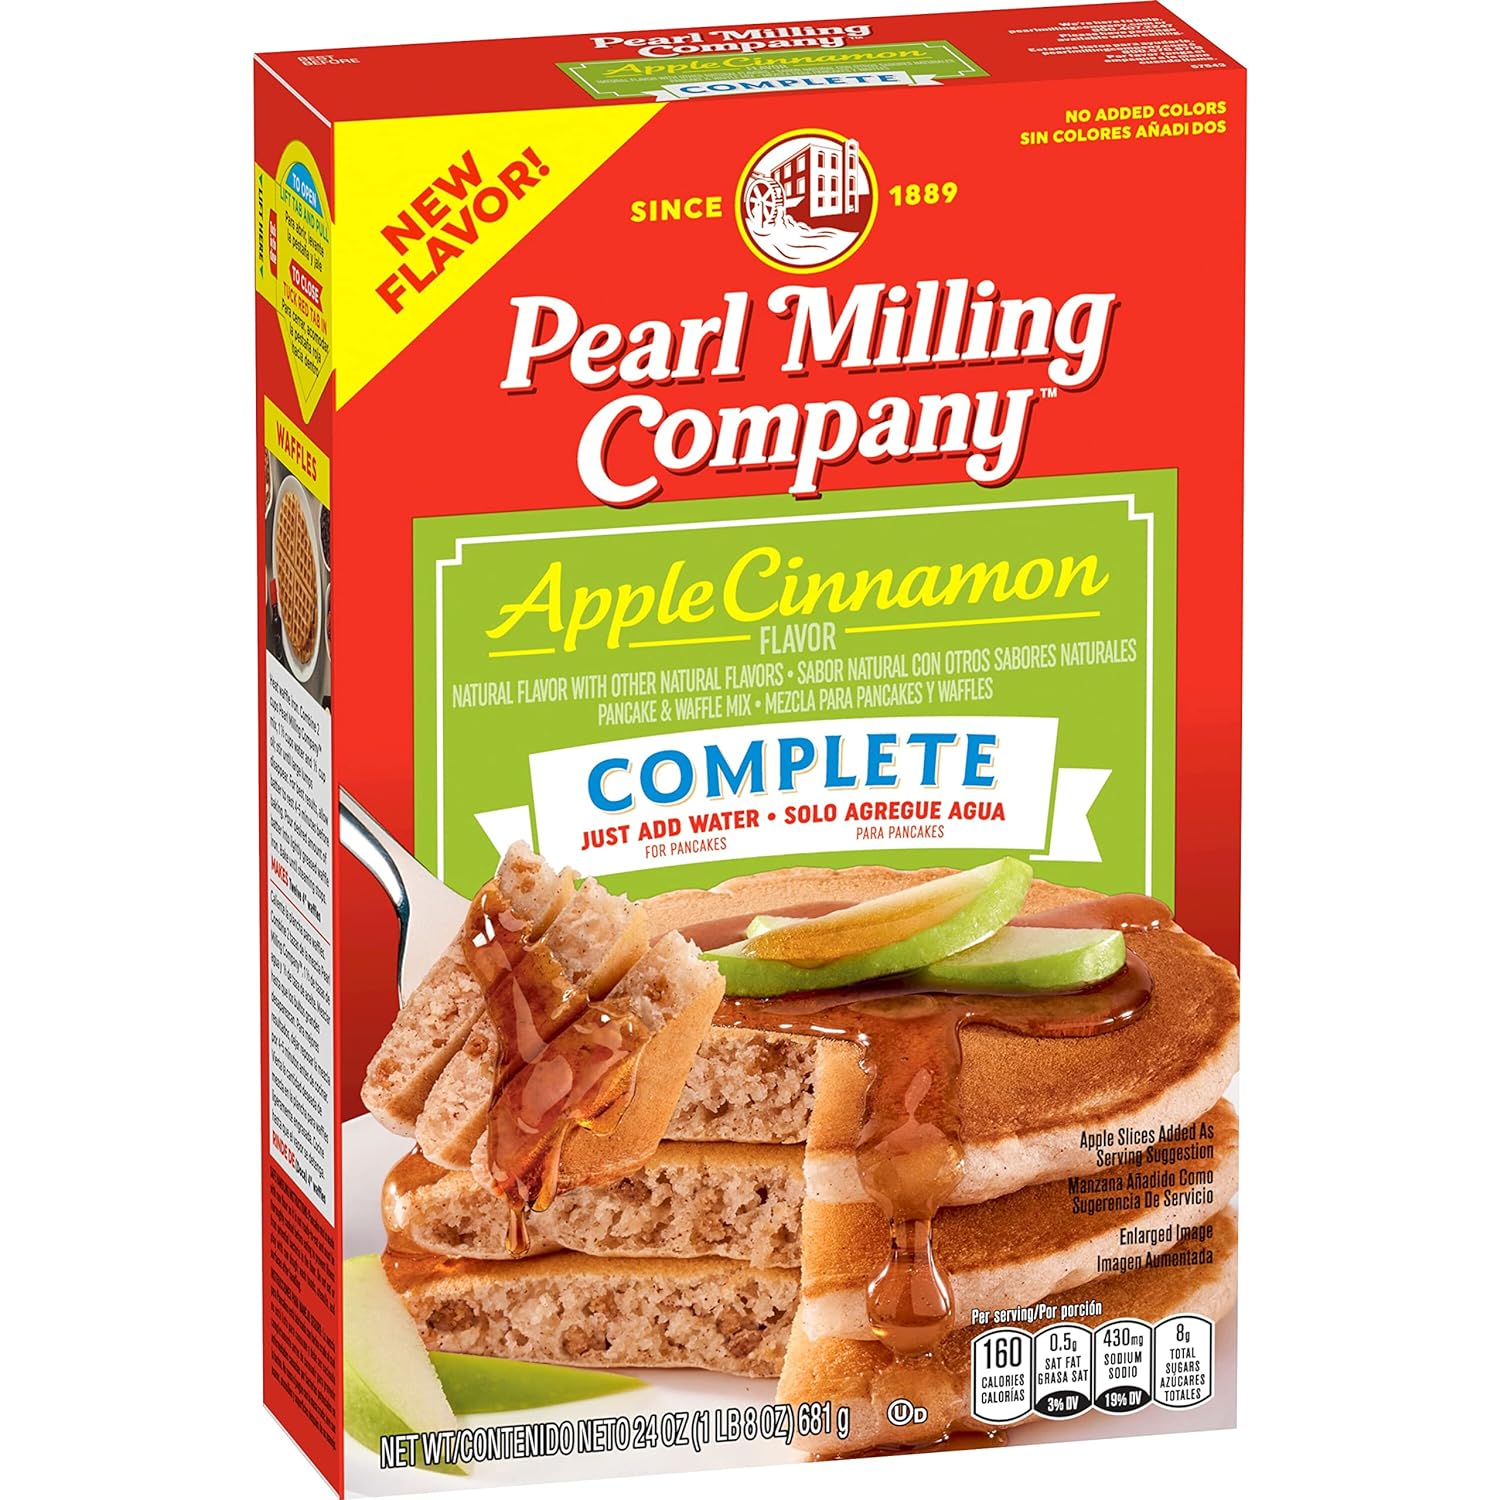 Pearl Milling Company 1.5lb Complete Mix - Apple Cinnamon